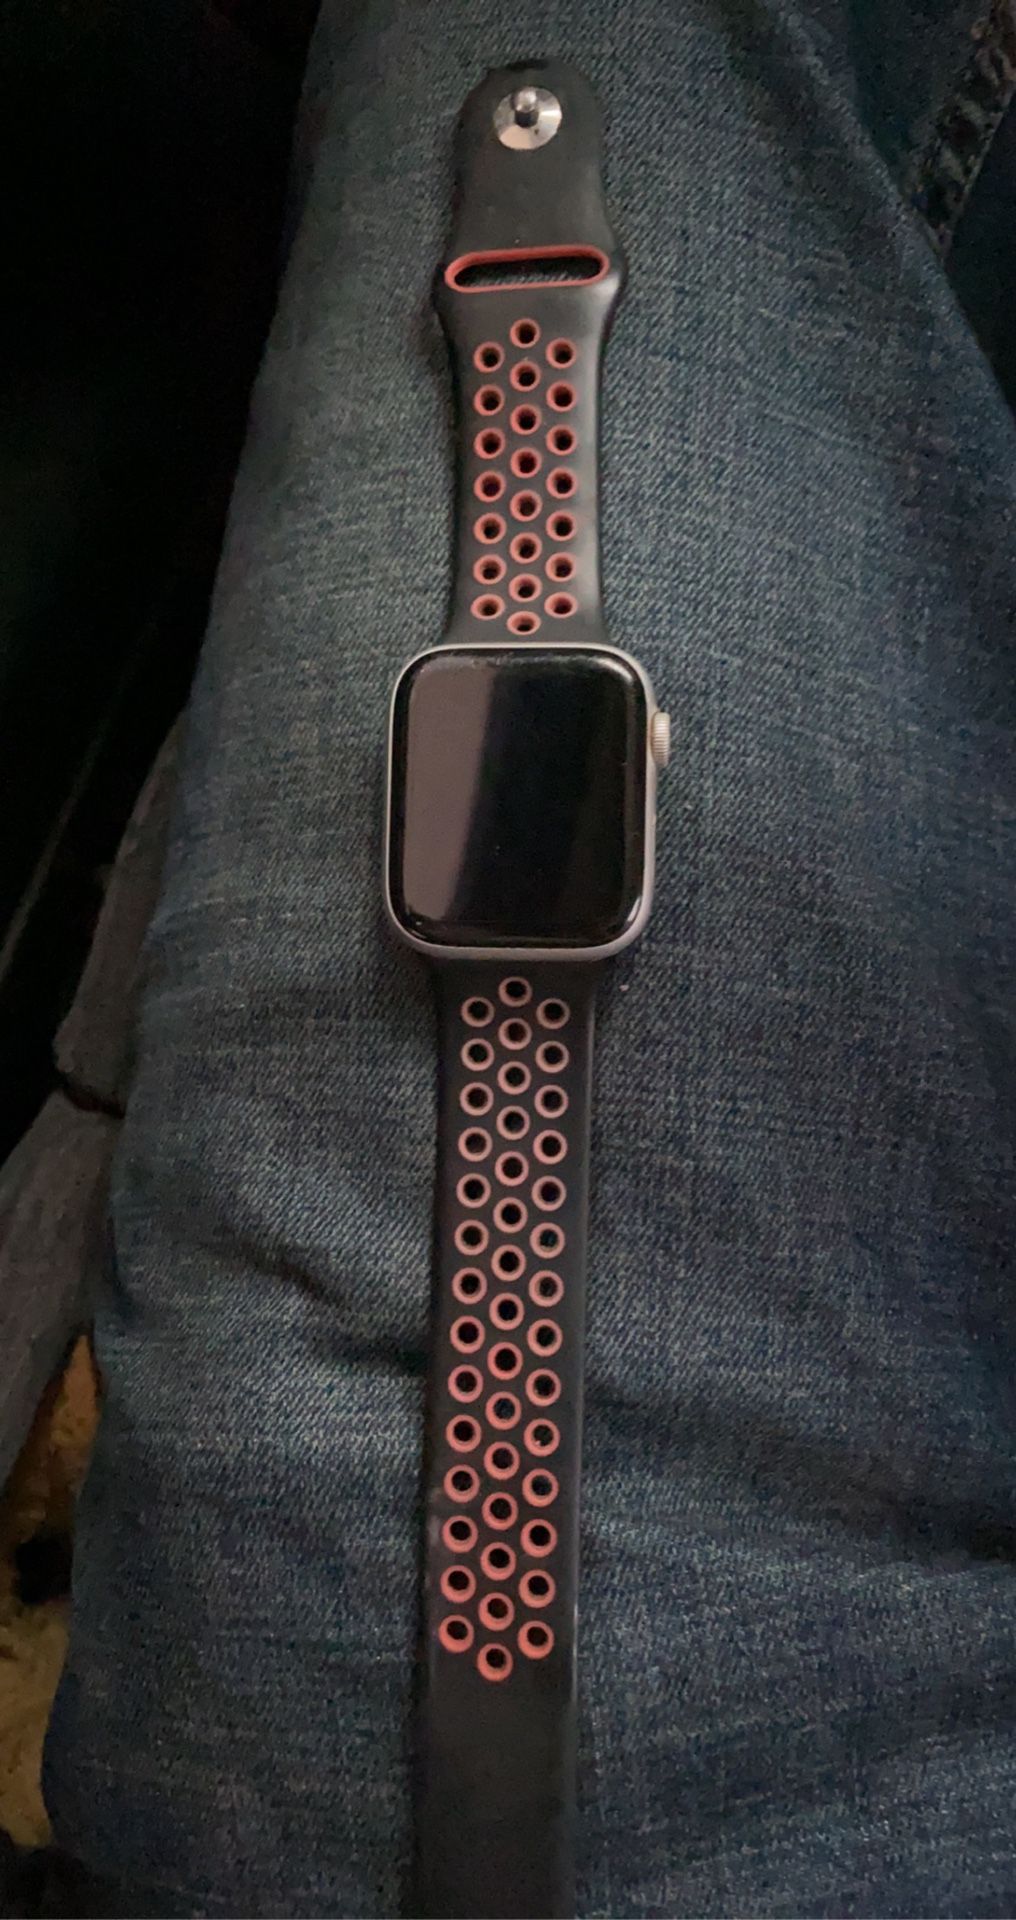 Series 4 Apple Watch 